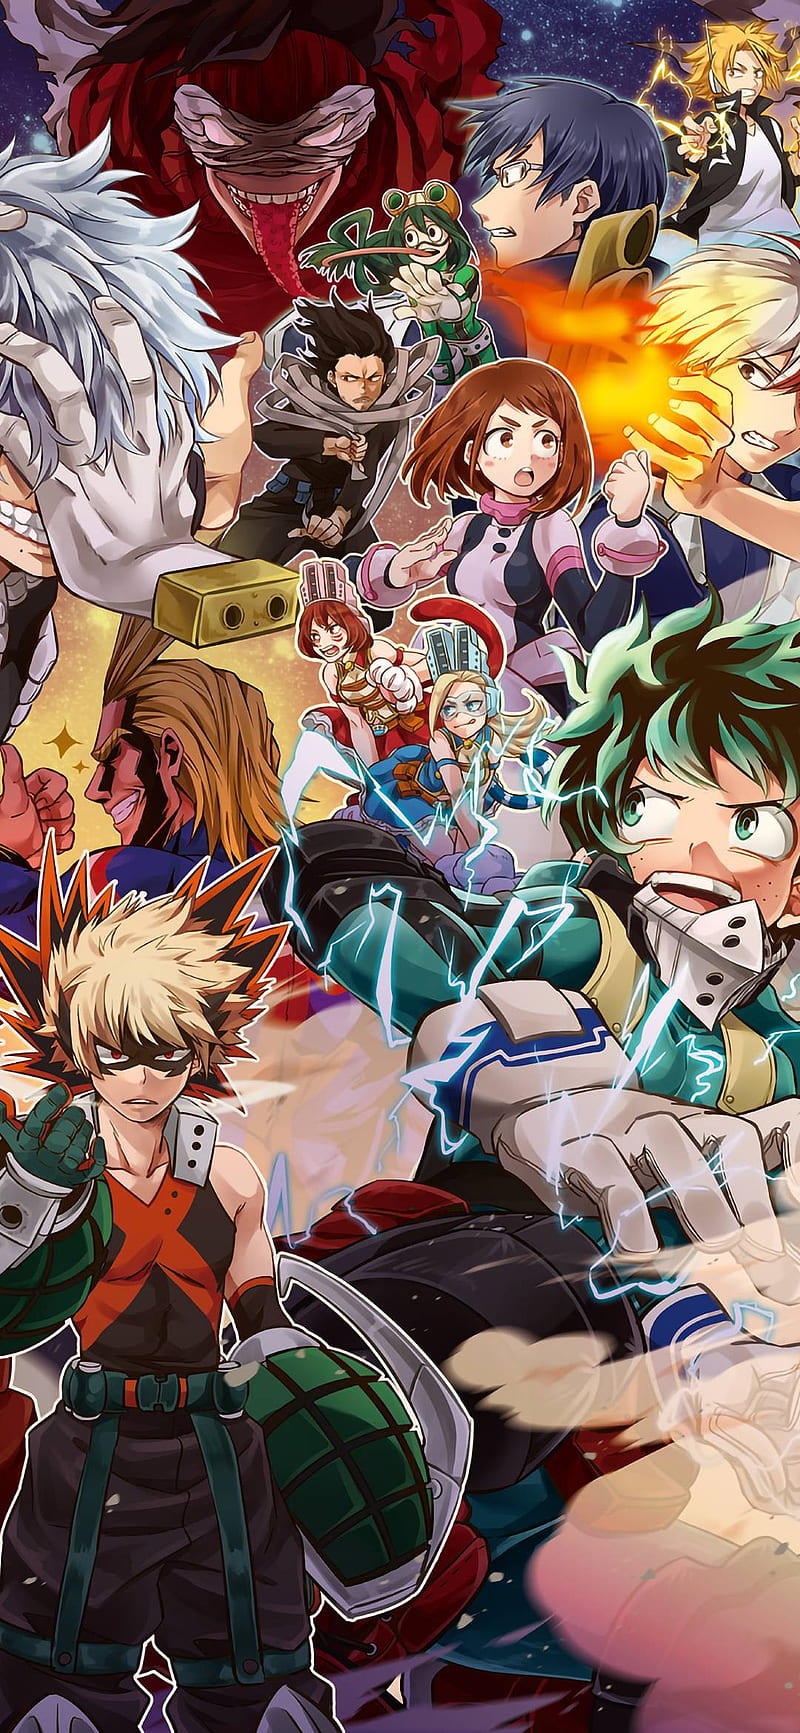 14 Anime Shows To Watch If You Love My Hero Academia